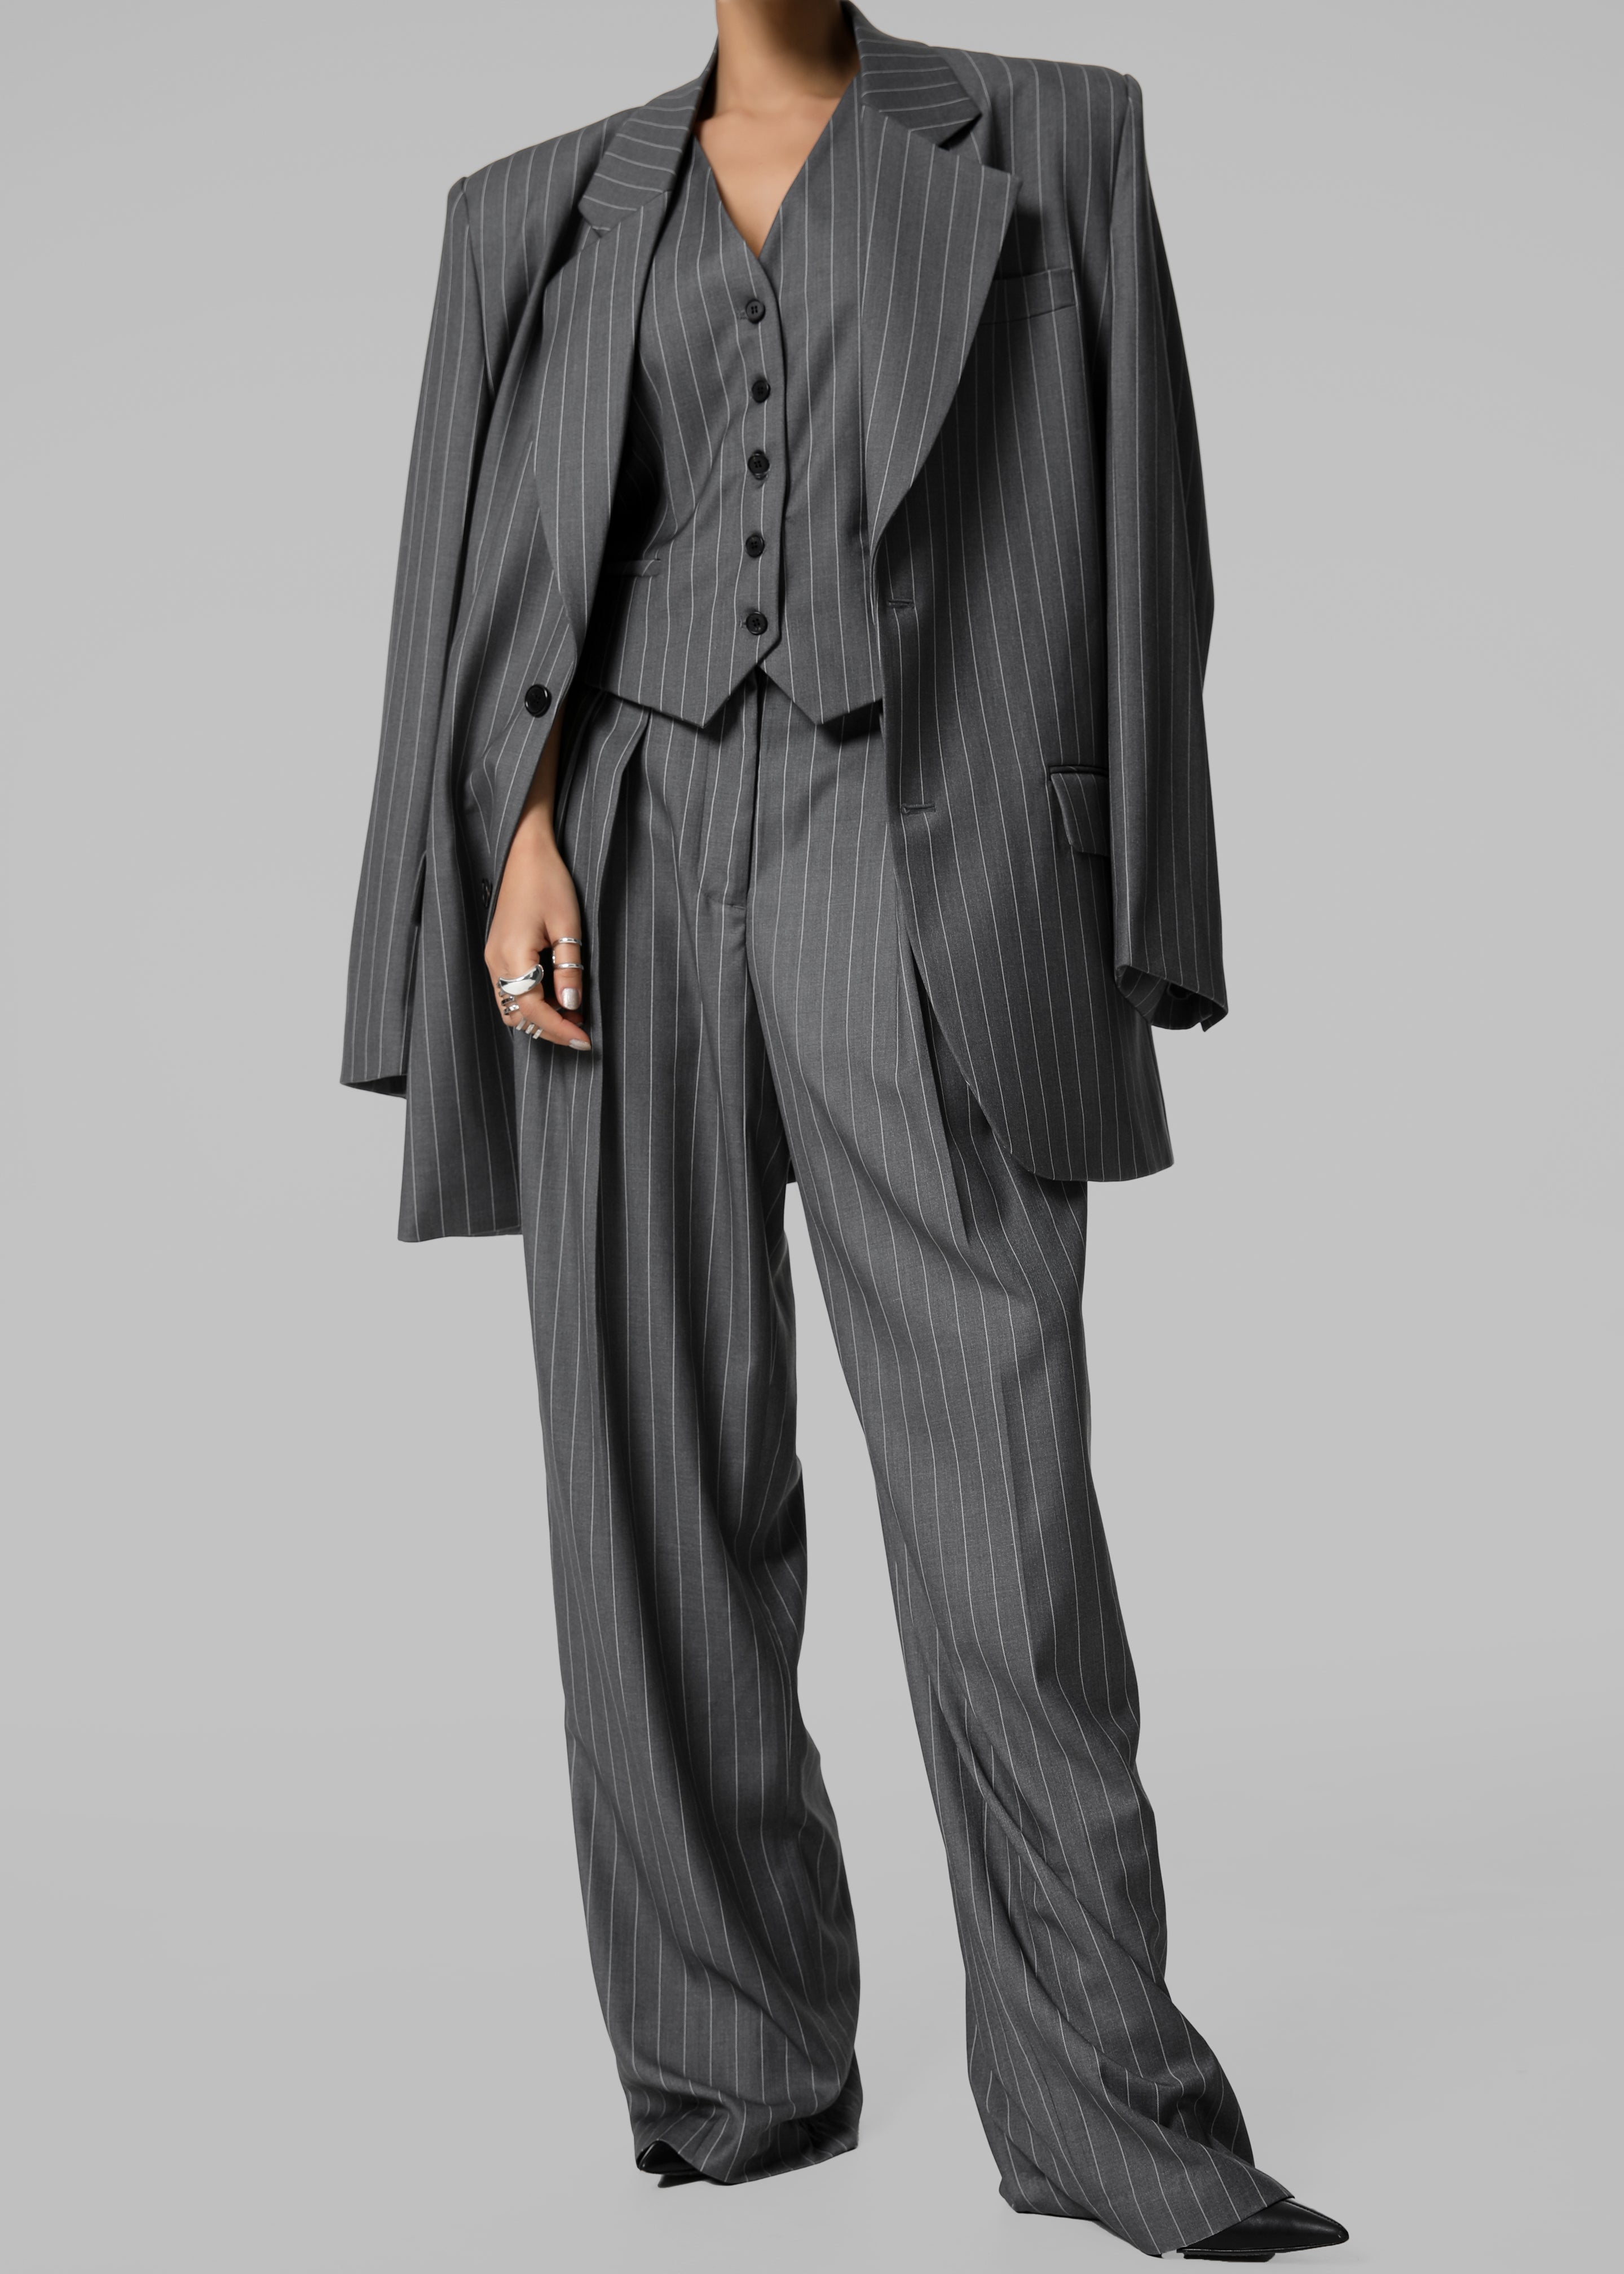 Holland Suit Vest - Charcoal/White Pinstripe - 3